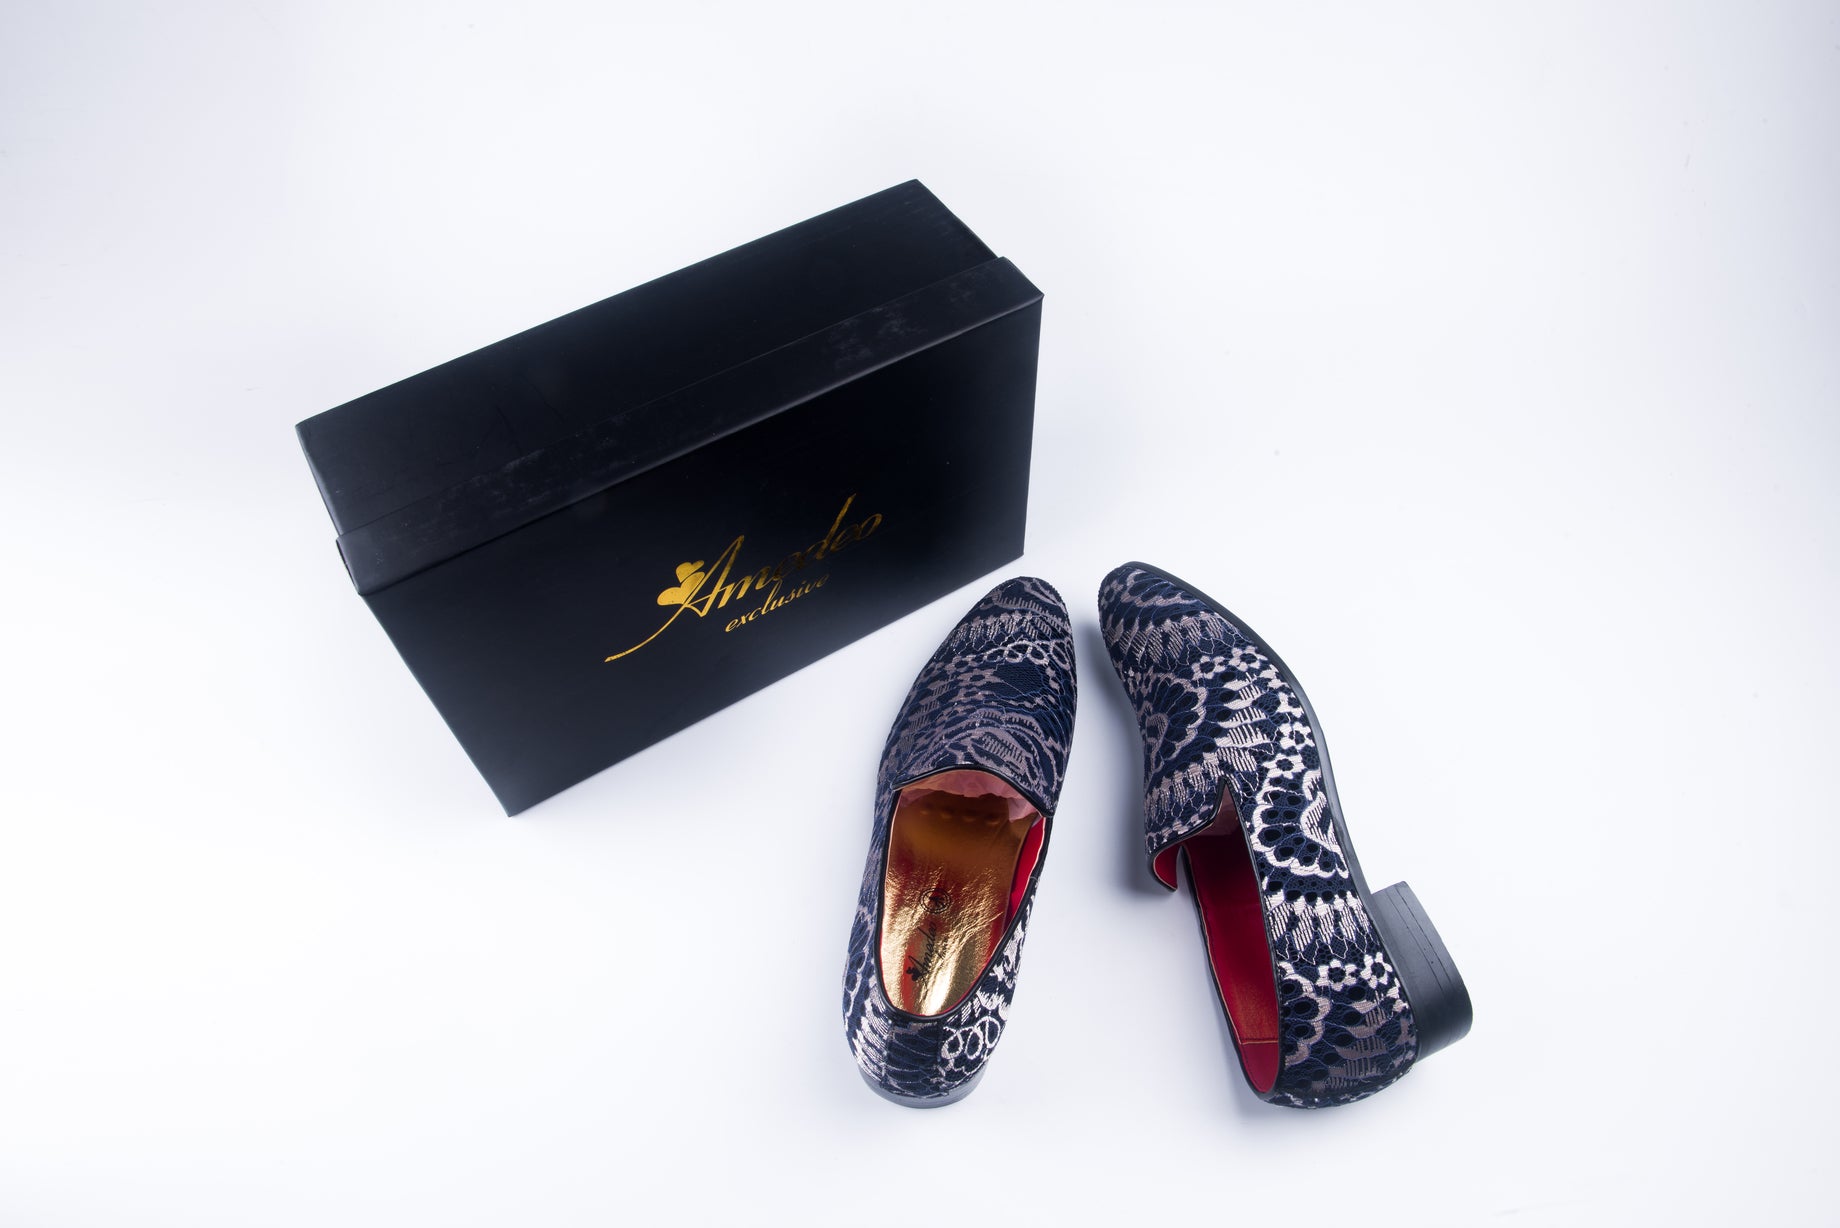 Shop Louis Vuitton Men's White Loafers & Slip-ons